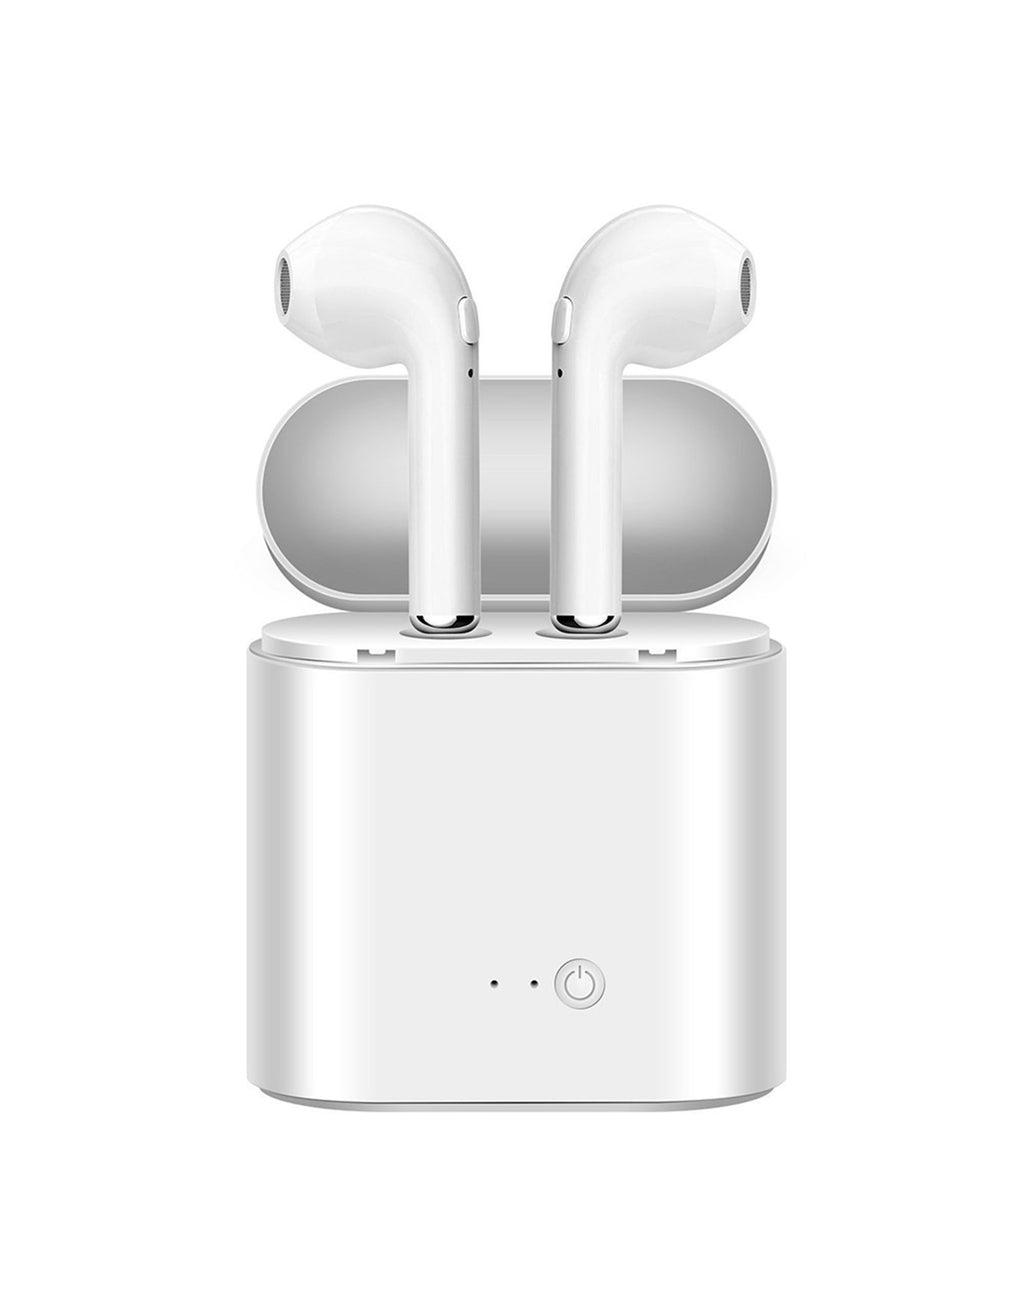 probeat wireless earbuds review